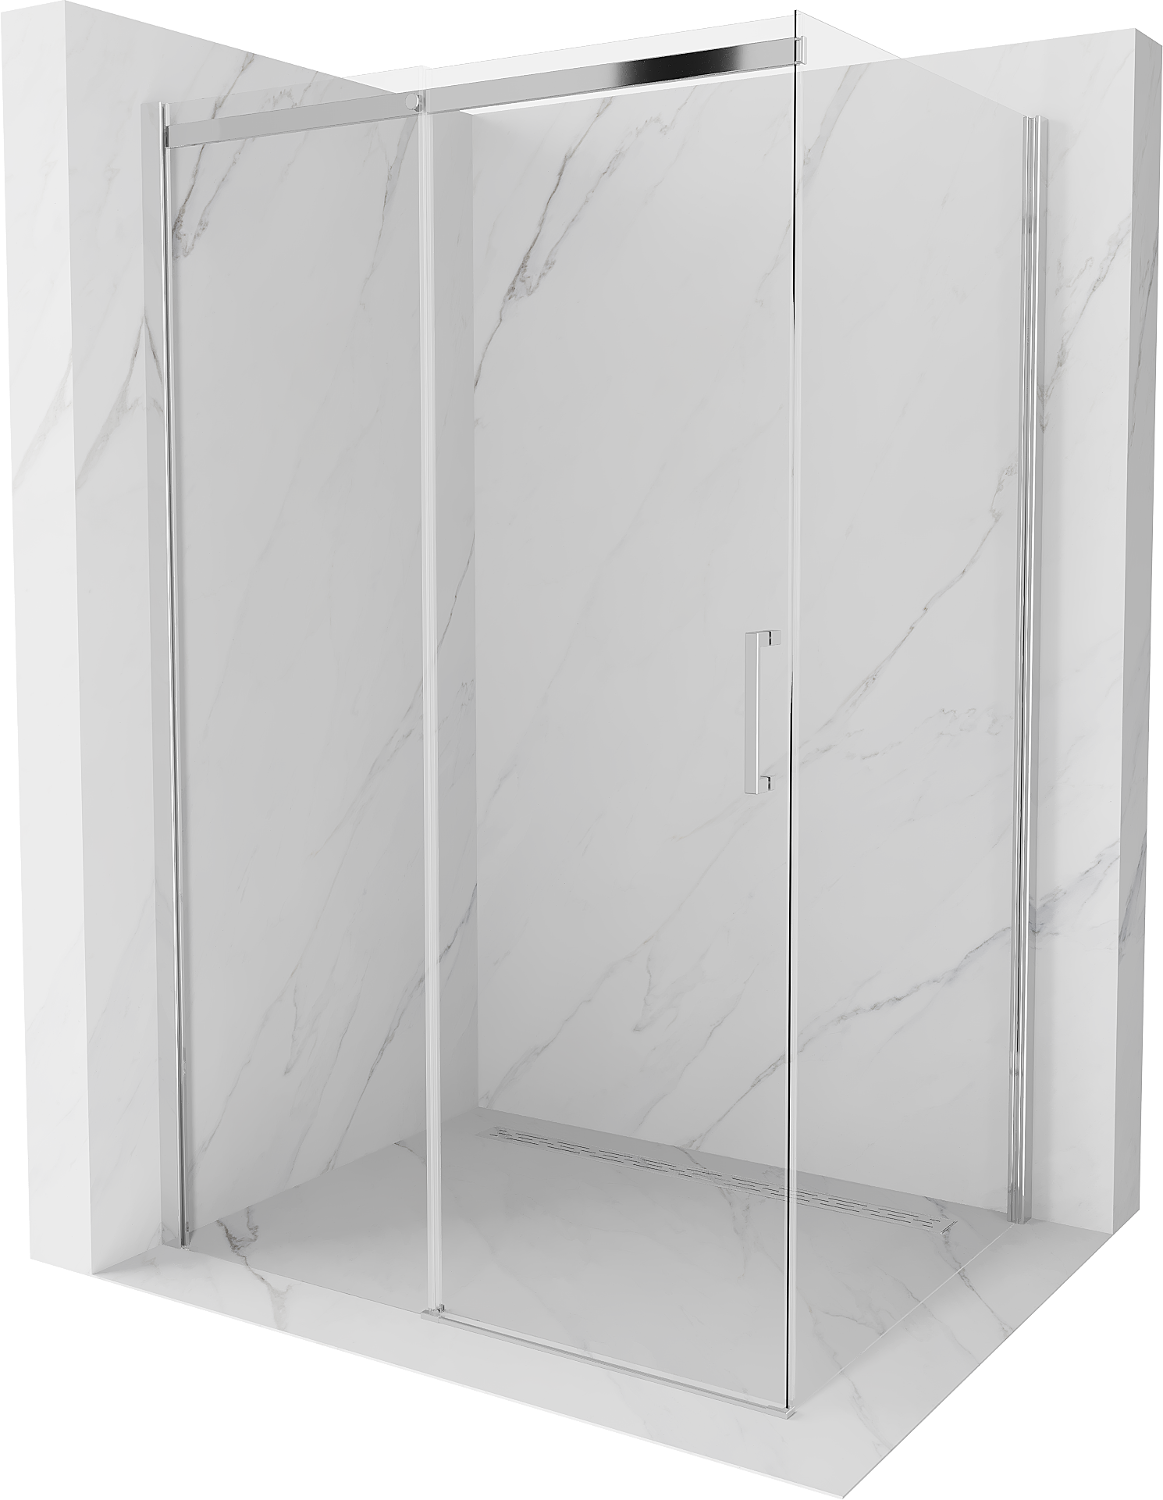 Mexen Omega kabina prysznicowa rozsuwana 130 x 80 cm, transparent, chrom - 825-130-080-01-00